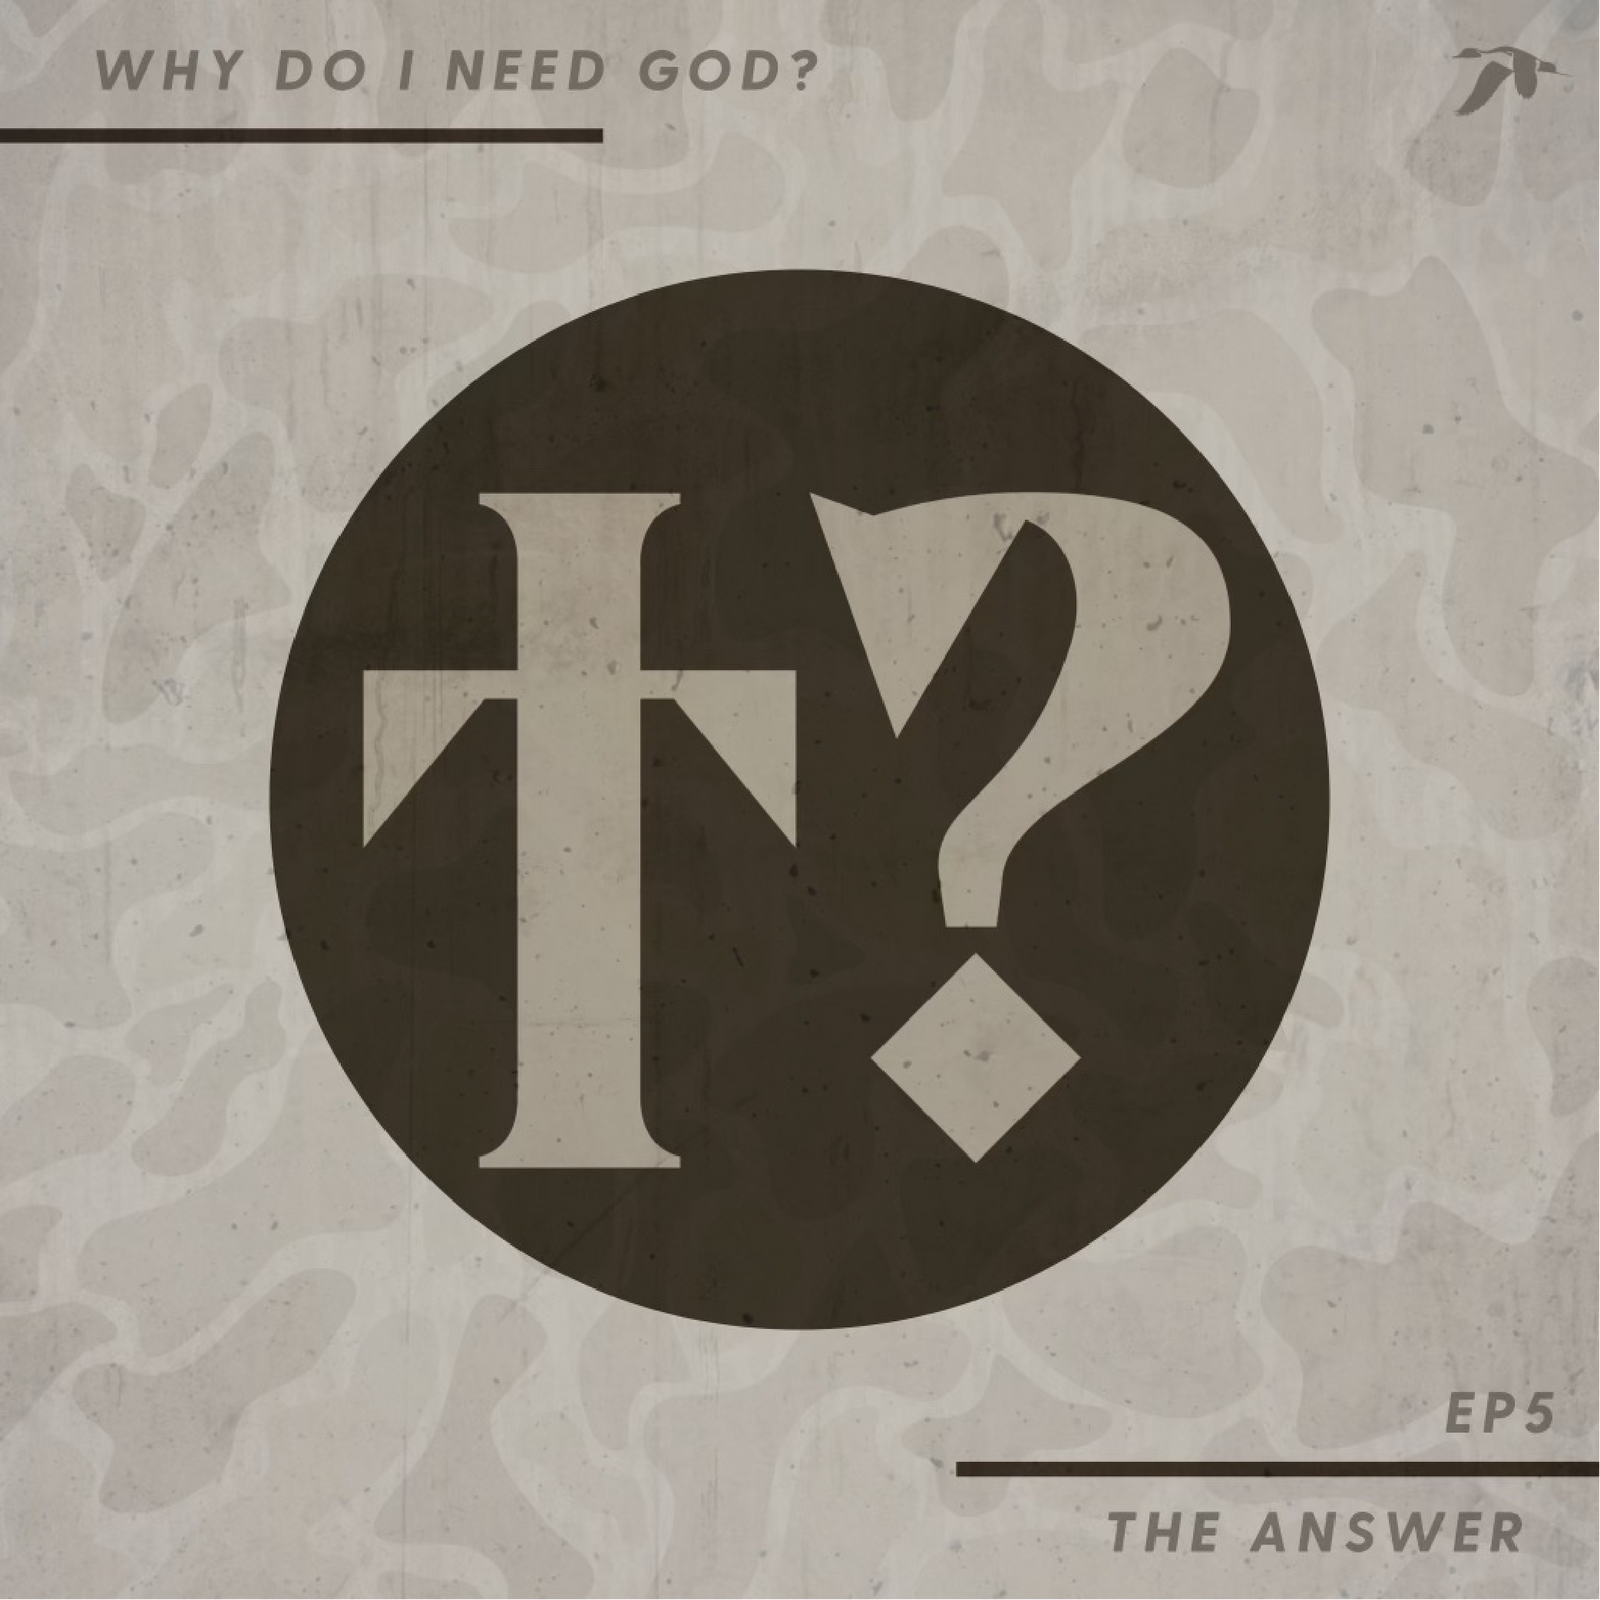 Why Do I Need God? EP5: The Answer